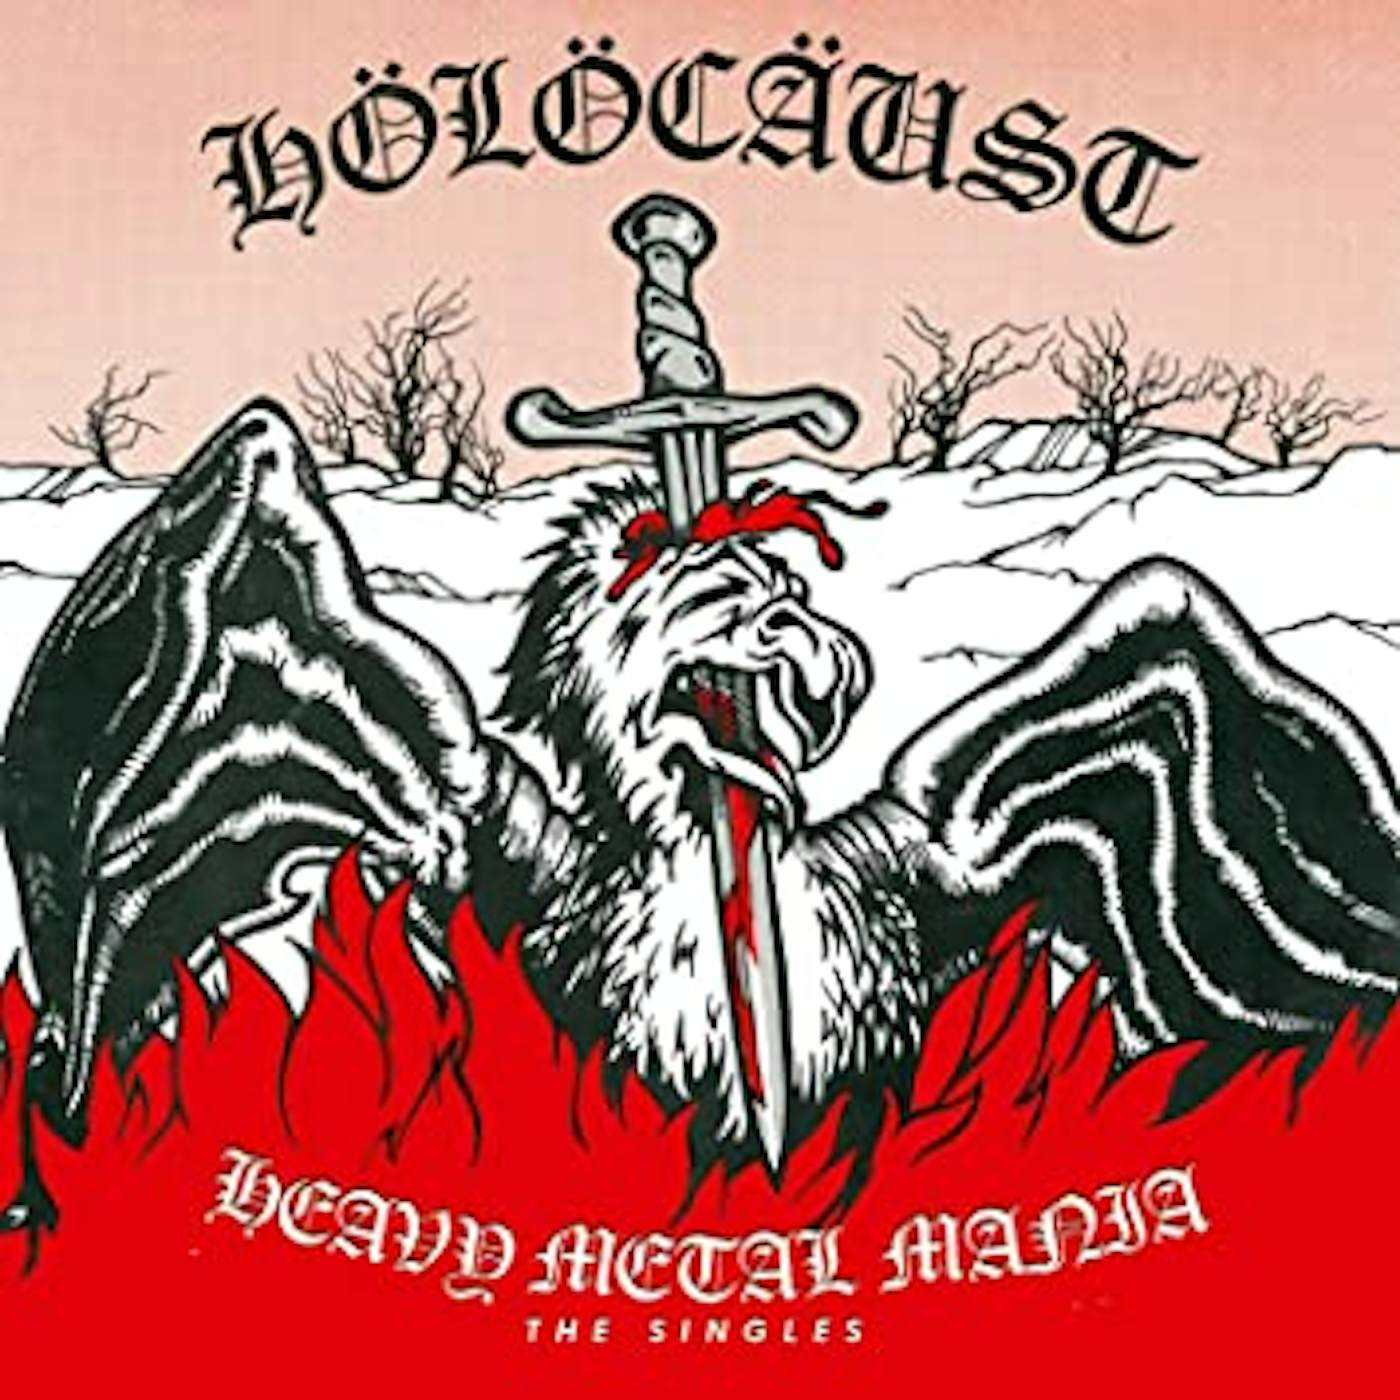 Holocaust HEAVY METAL MANIA: THE SINGLES Vinyl Record